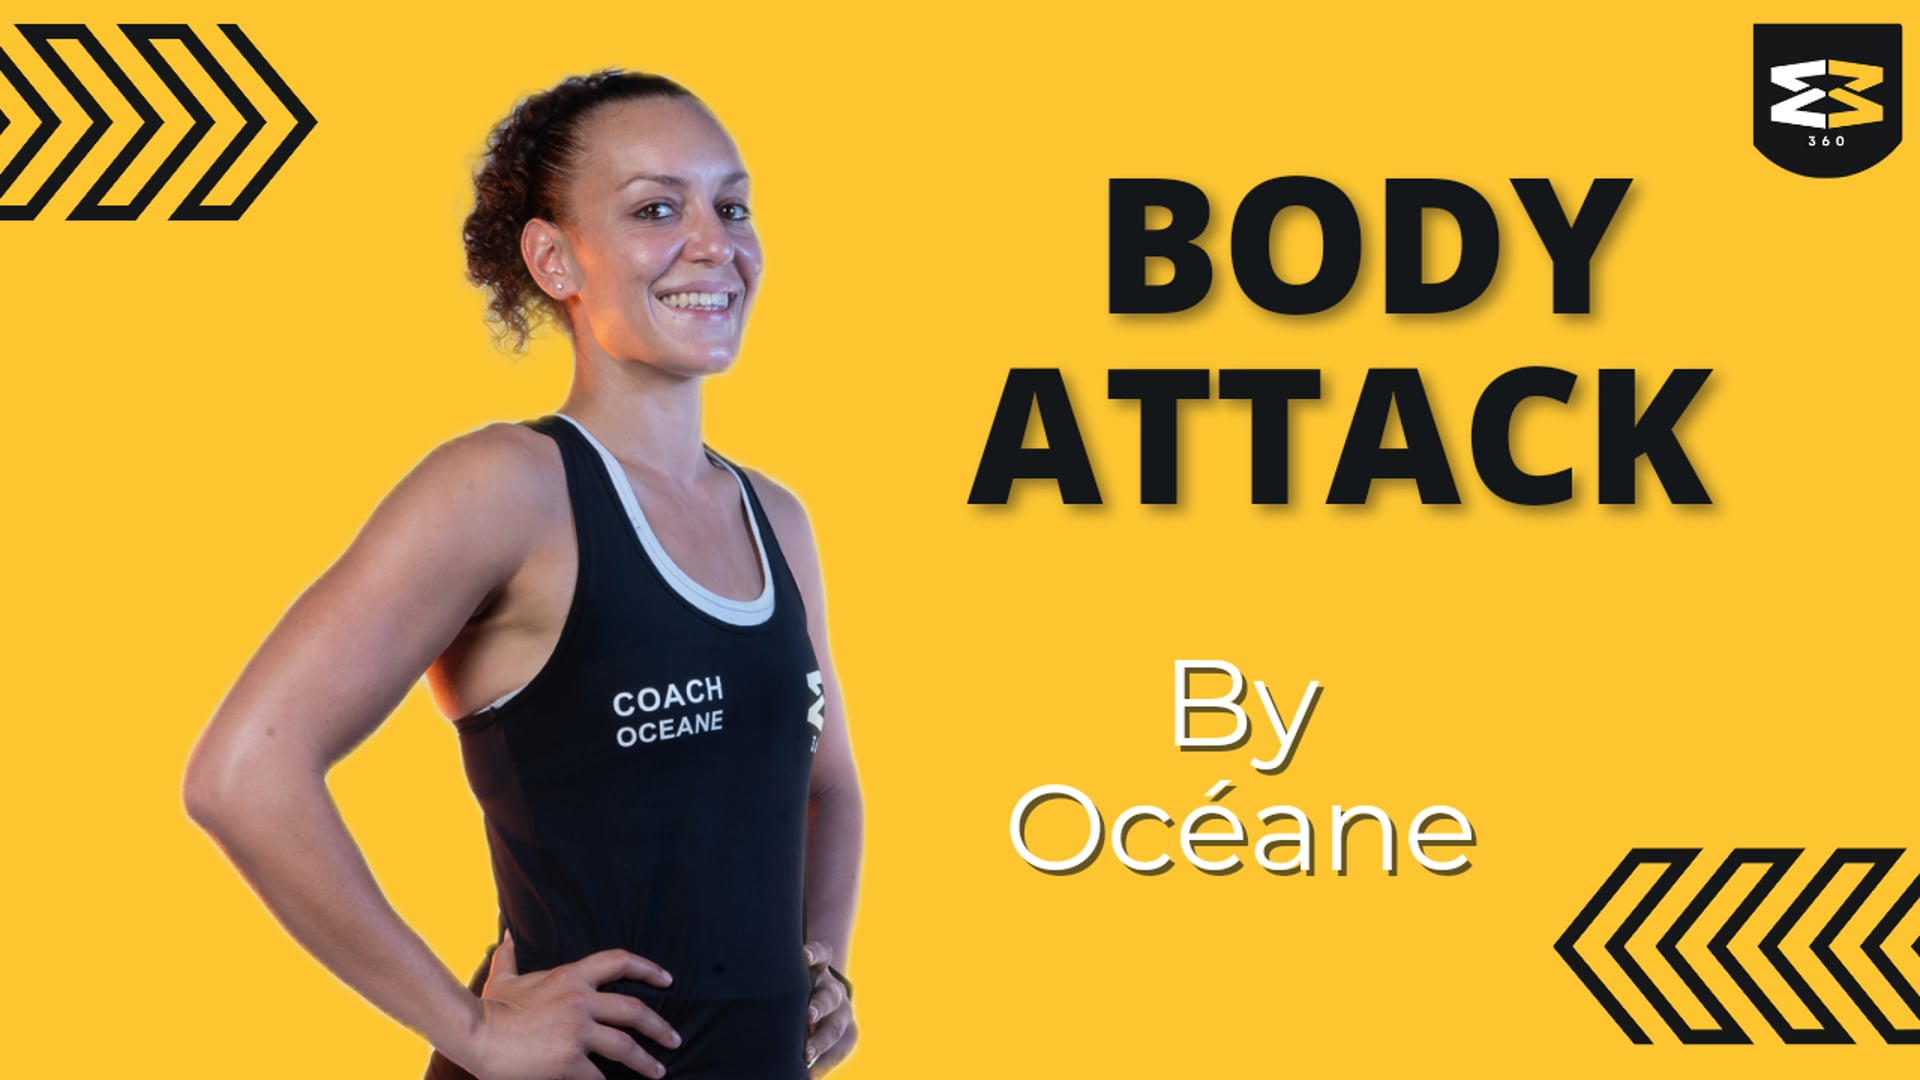 LIVE 23/09/18 - BODY ATTACK - OCEANE